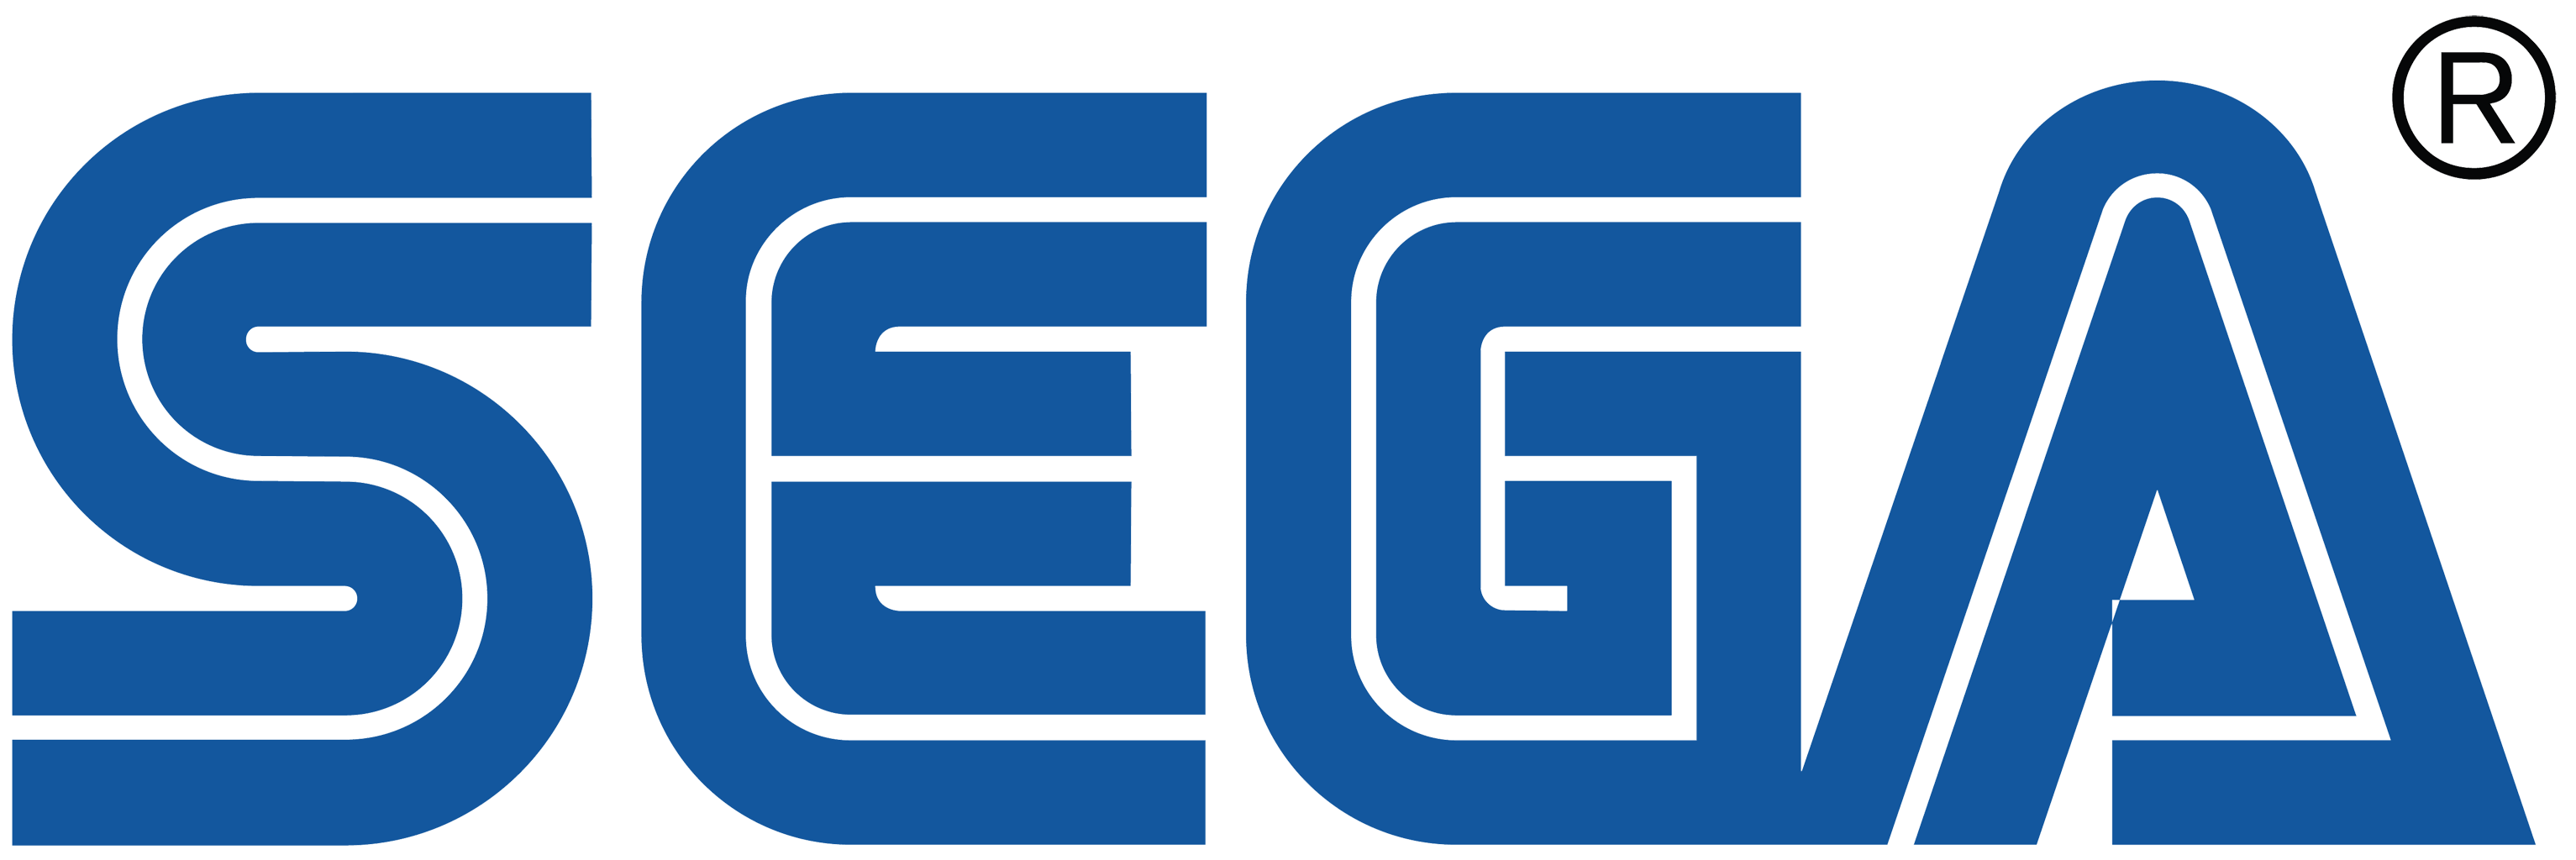 Sega Logo PNG Photos